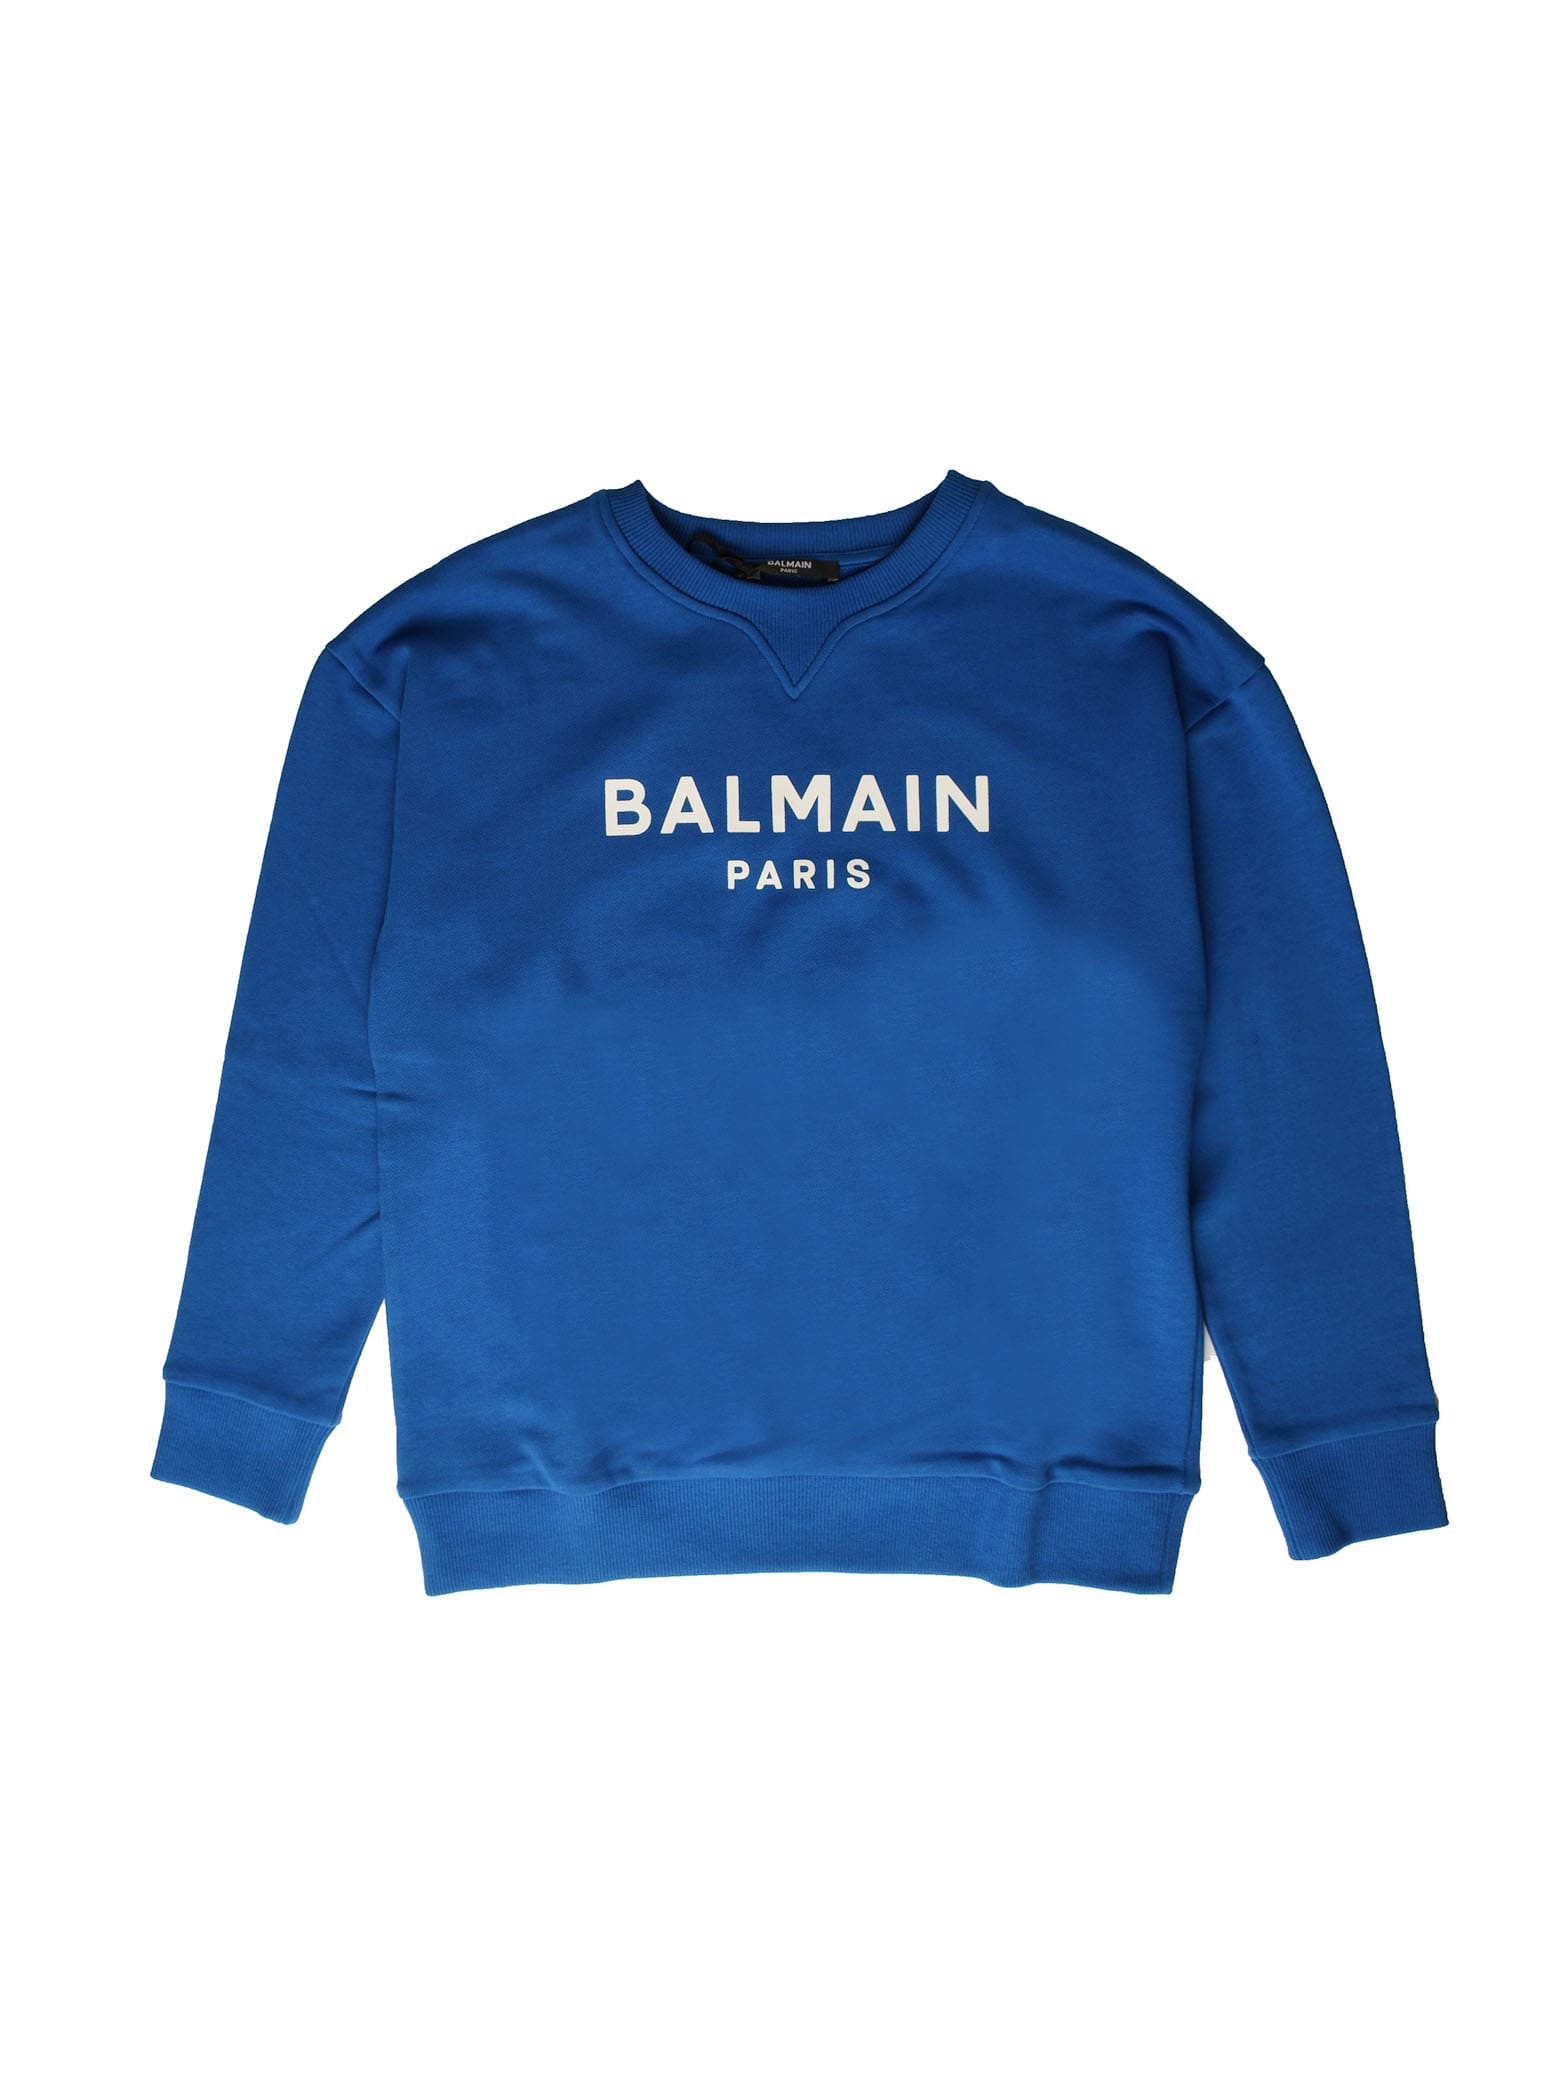 Balmain Bluette Sweatshirt With Logo